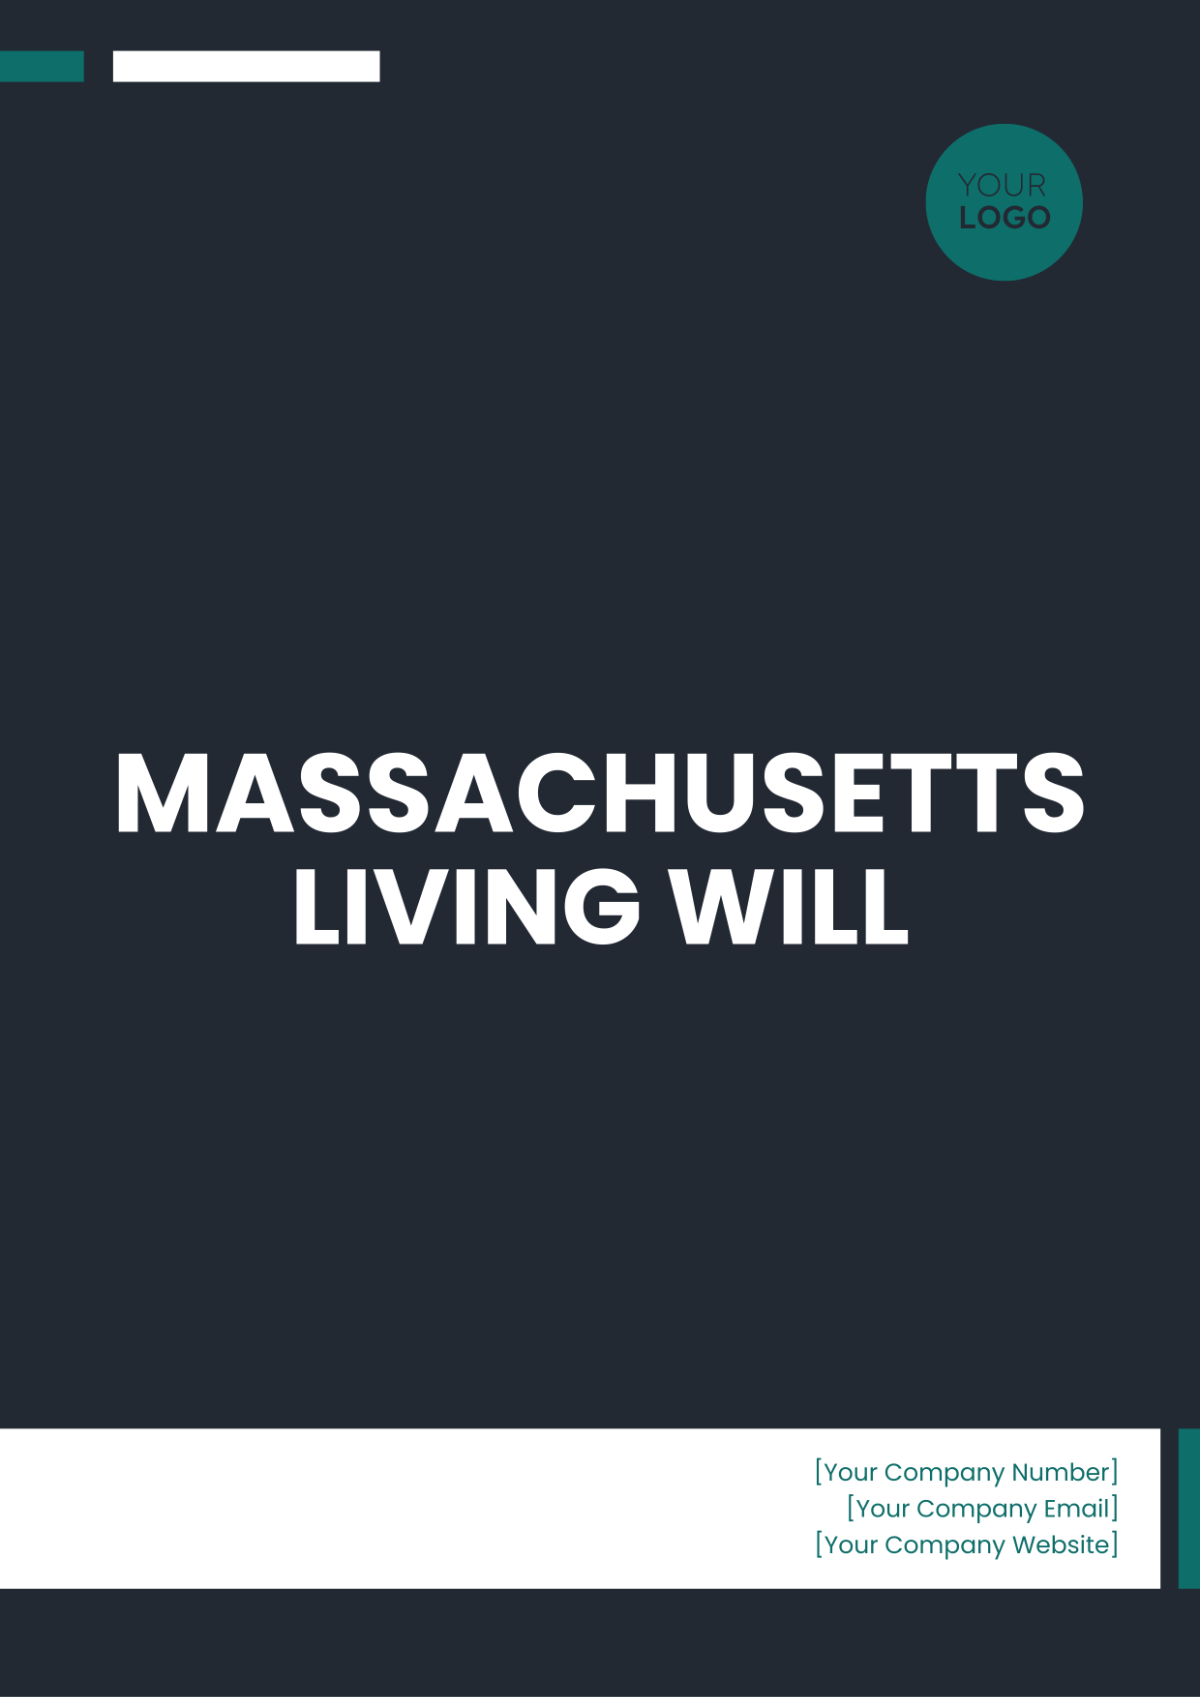 Massachusetts Living Will Template